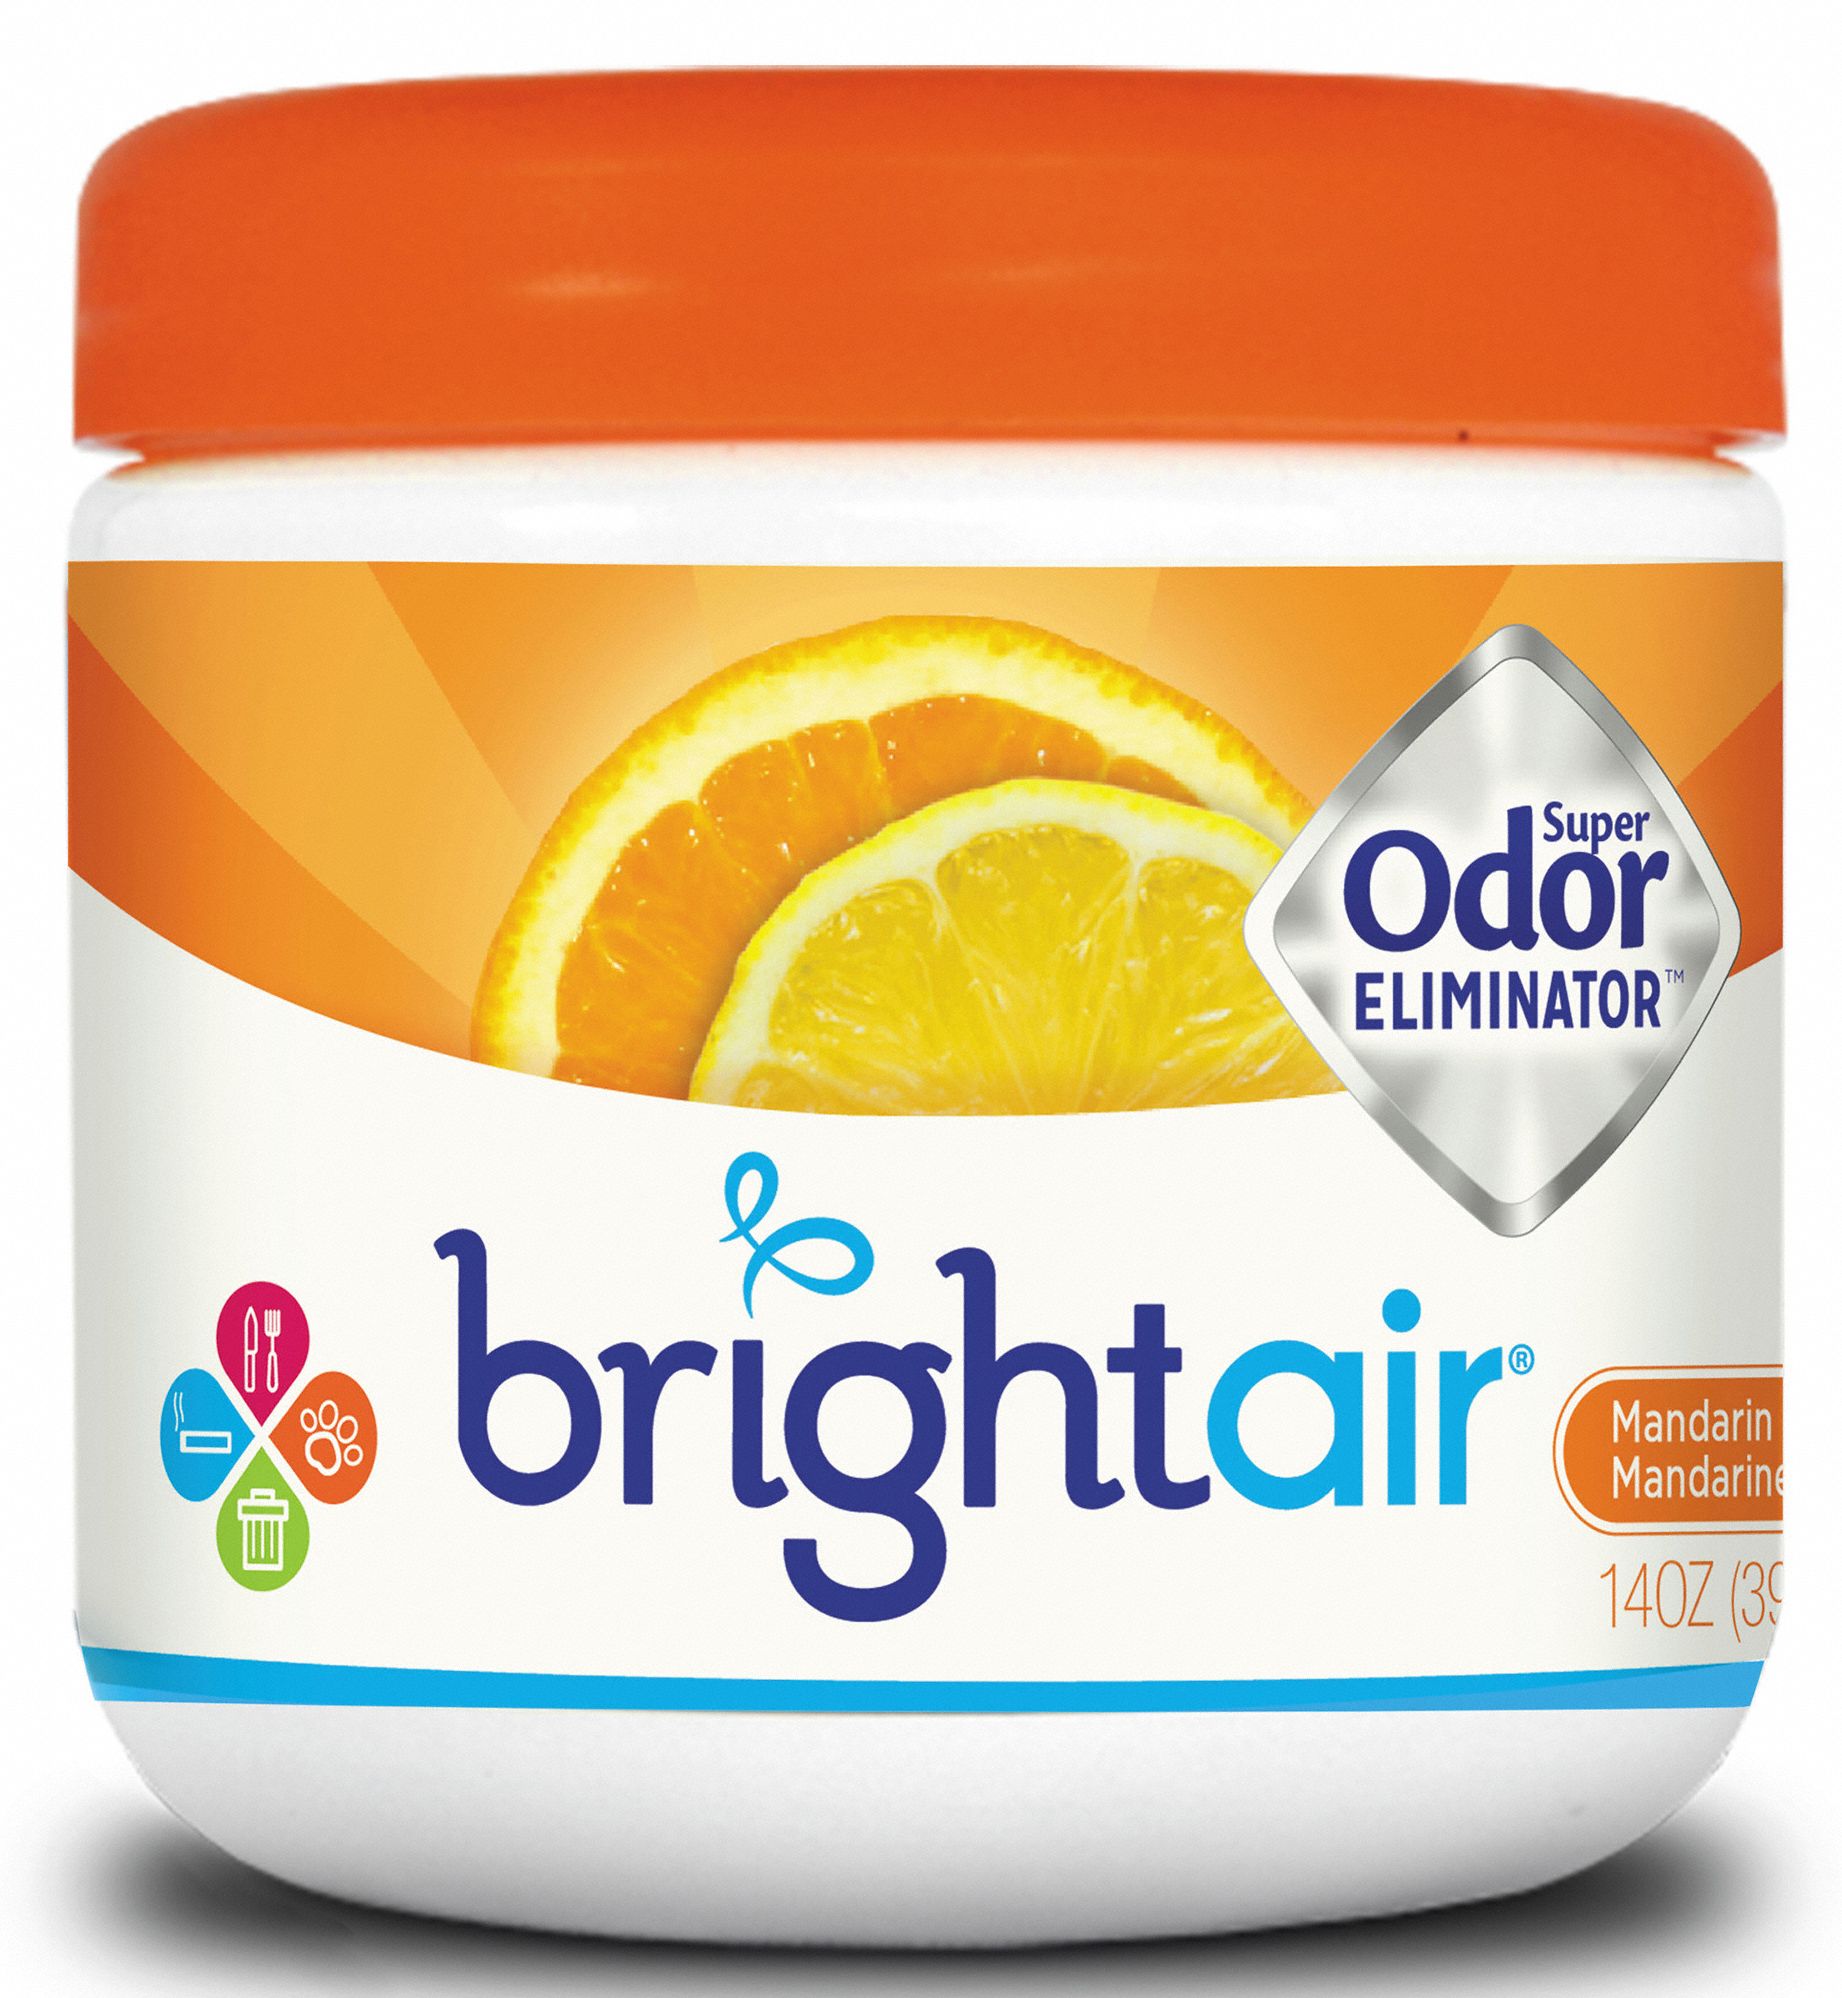 Deodorizer: Odor Eliminators, Jar, 14 oz Container Size, Gel, Ready to Use, Orange, 6 PK